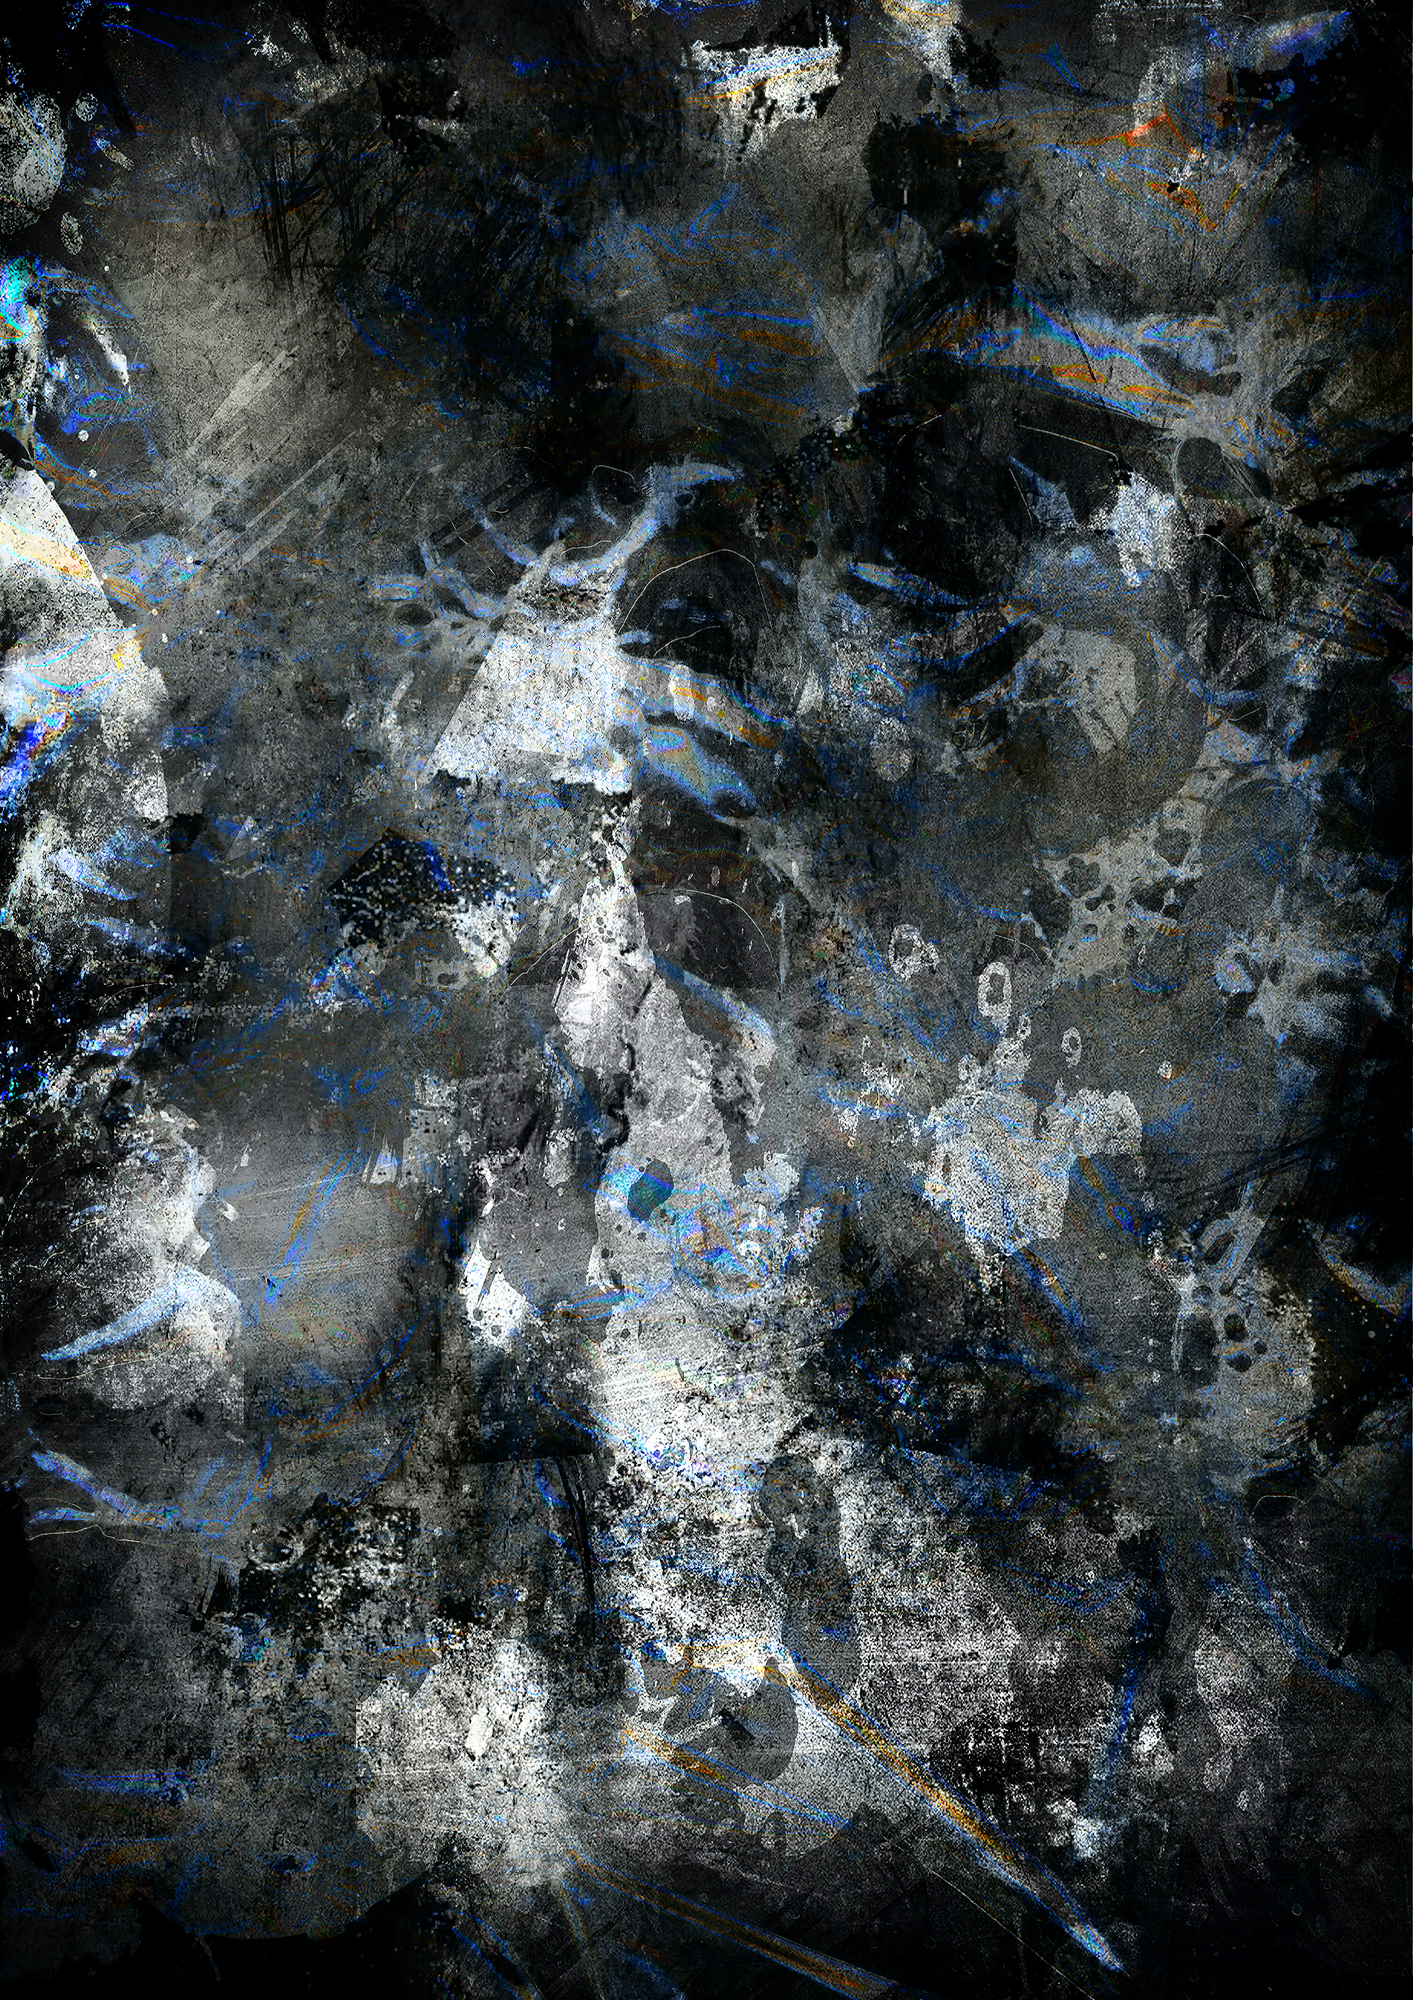 Grunge texture background image, free download